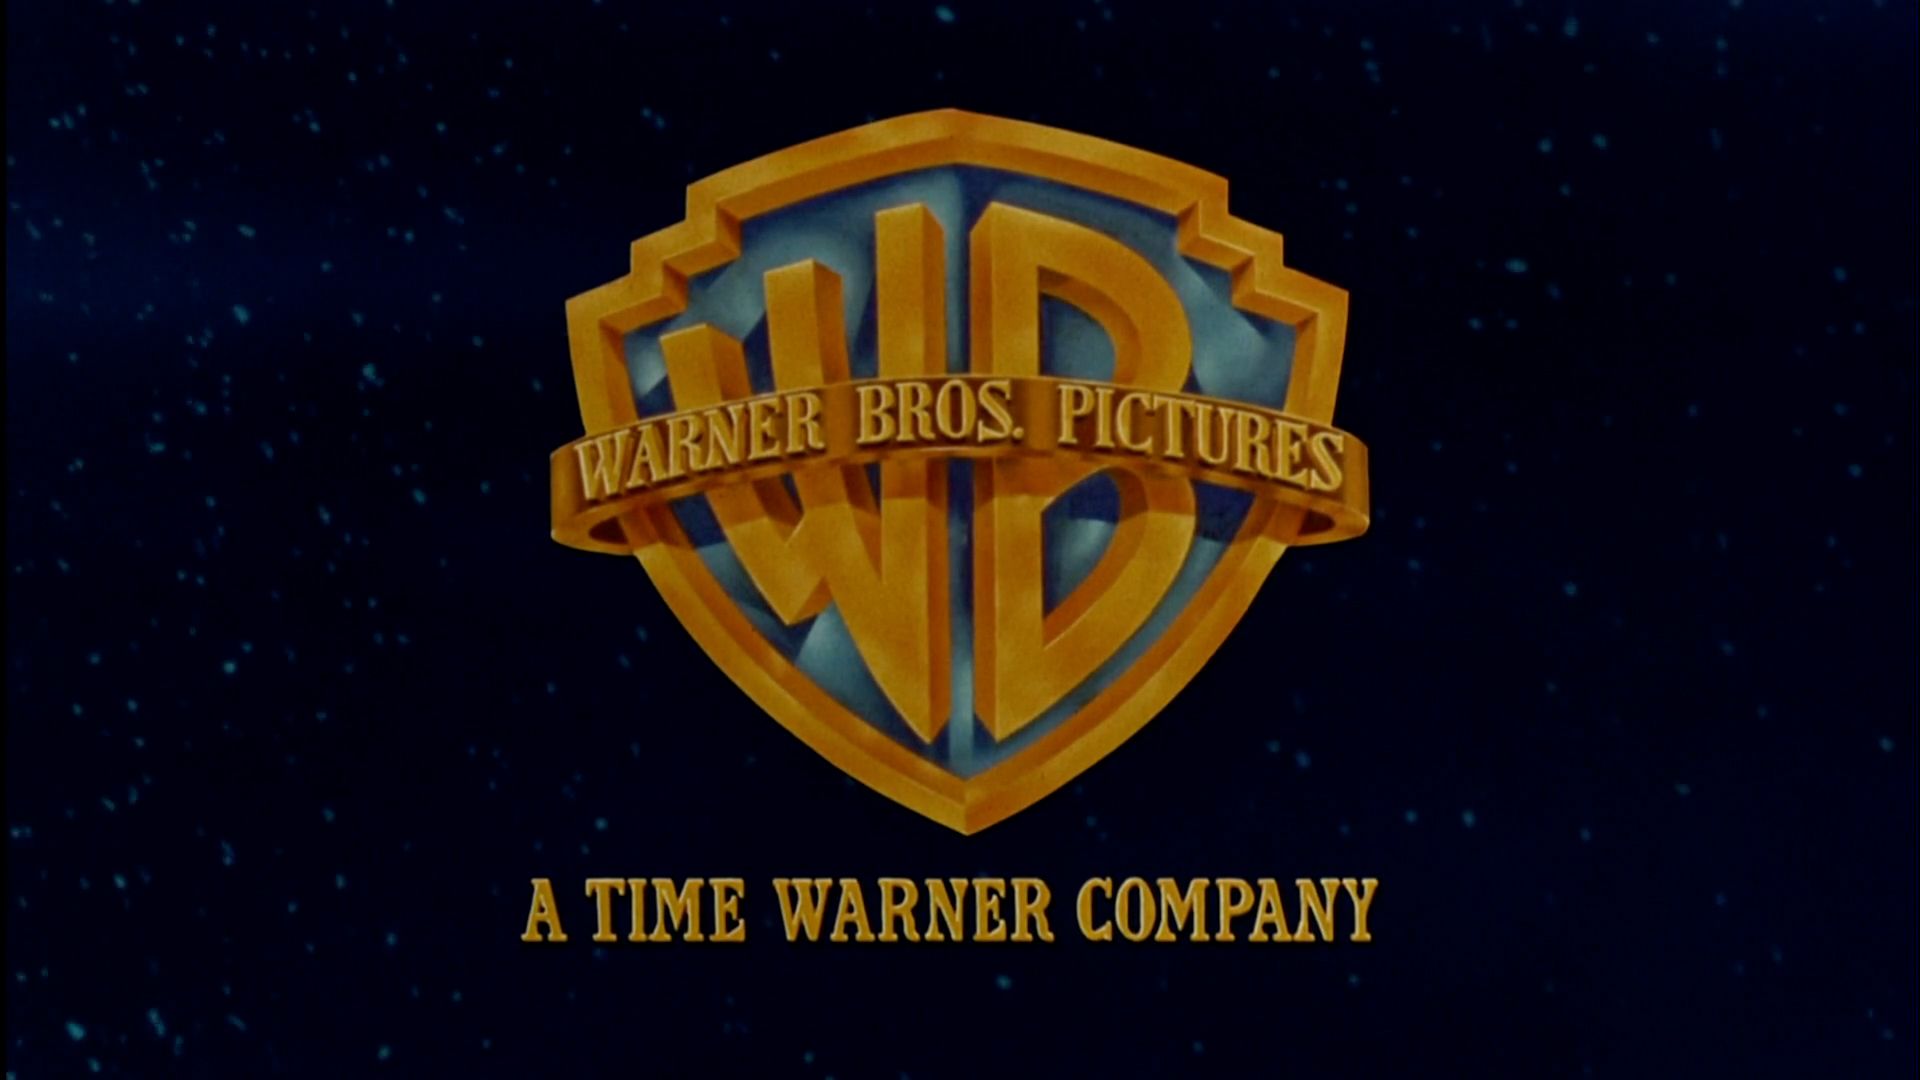 Warner Bros Picture from 'Batman Returns' (1992) (c) 1992 Warner Bros Picture. Warner bros logo, Warner bros, Vintage movies